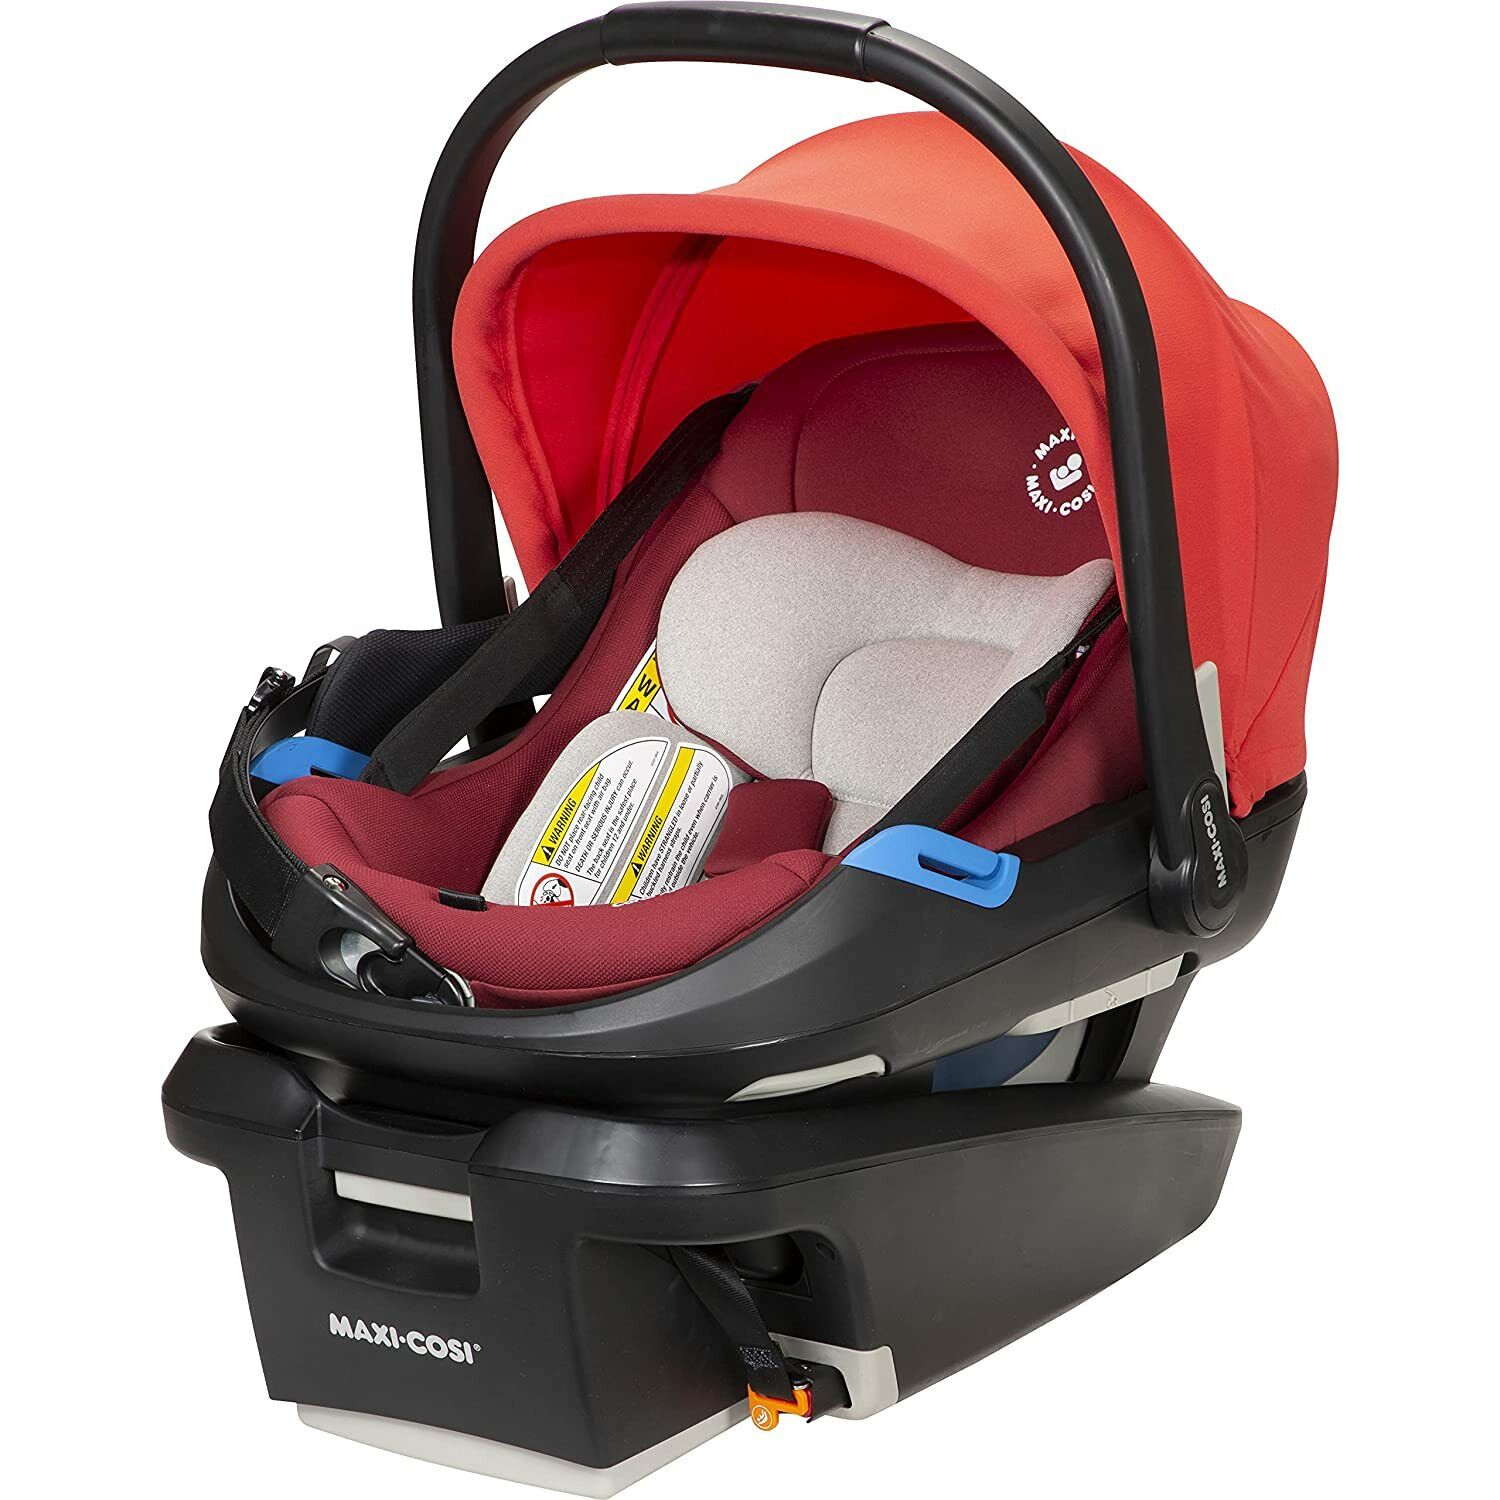 Maxi-cosi Coral Xp Infant Car Seat, Essential Red – Purecosi